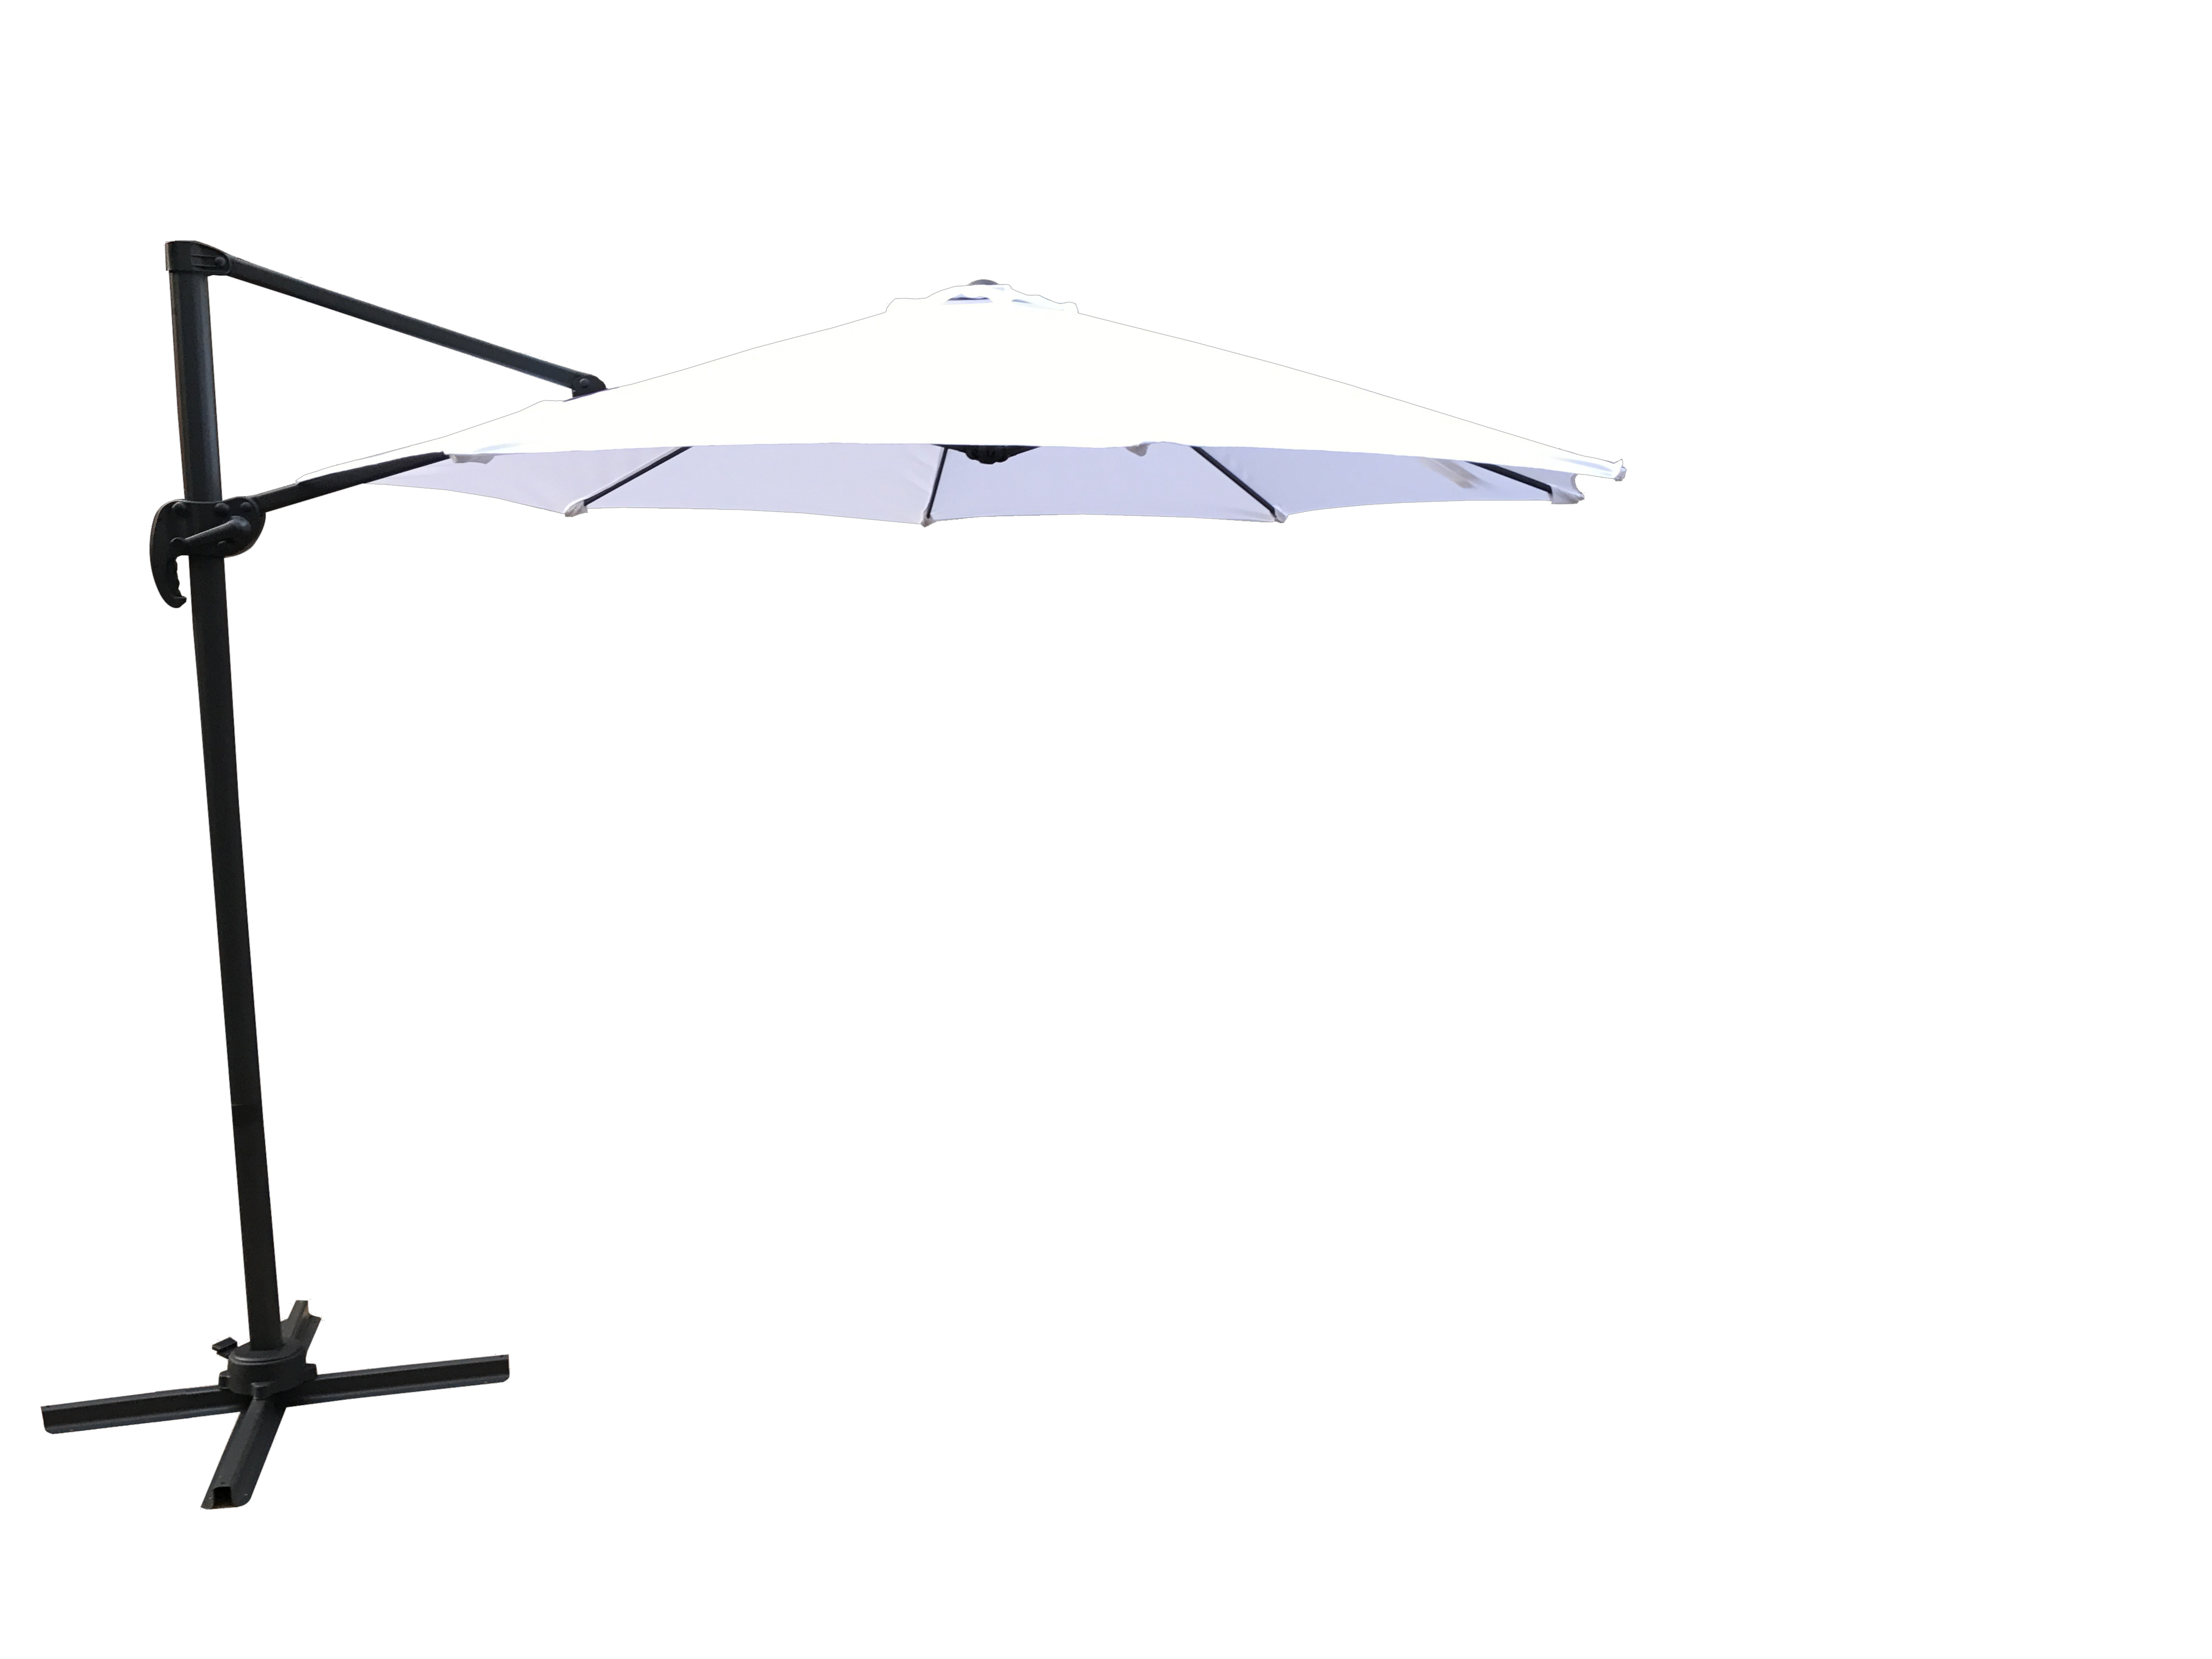 VENTURE DESIGN Leeds parasol med tilt, 3m - hvid, sort aluminium og stål